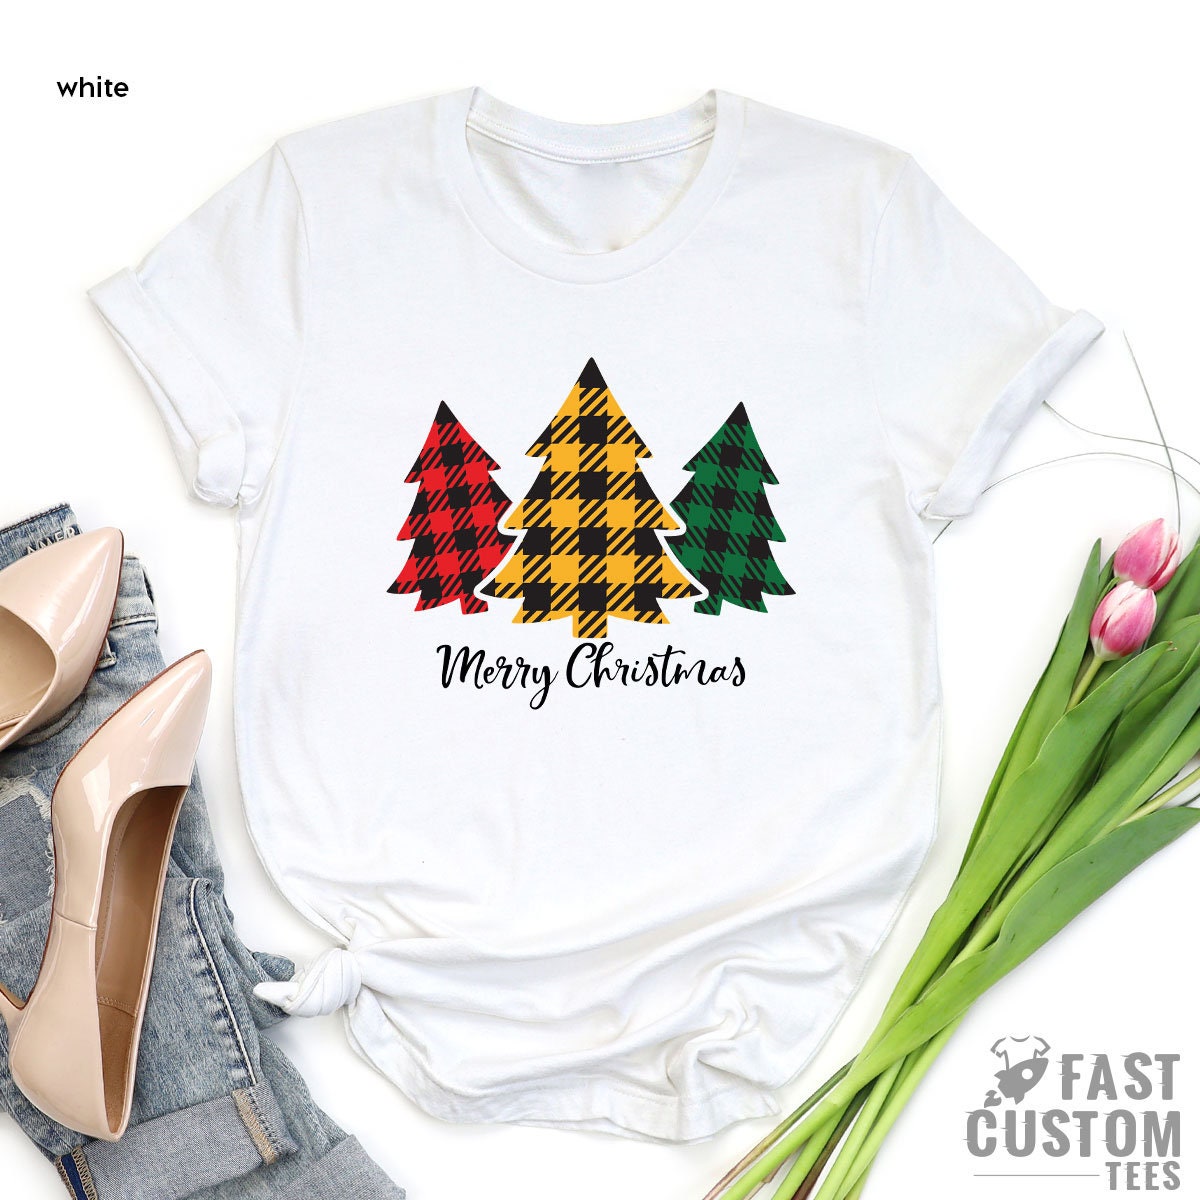 Christmas Tree T-shirt, Christmas T-Shirt, Merry Shirt, Women Christmas Gift, Cute Christmas Tee, Family Christmas Shirt, Holiday Merry Tee - Fastdeliverytees.com